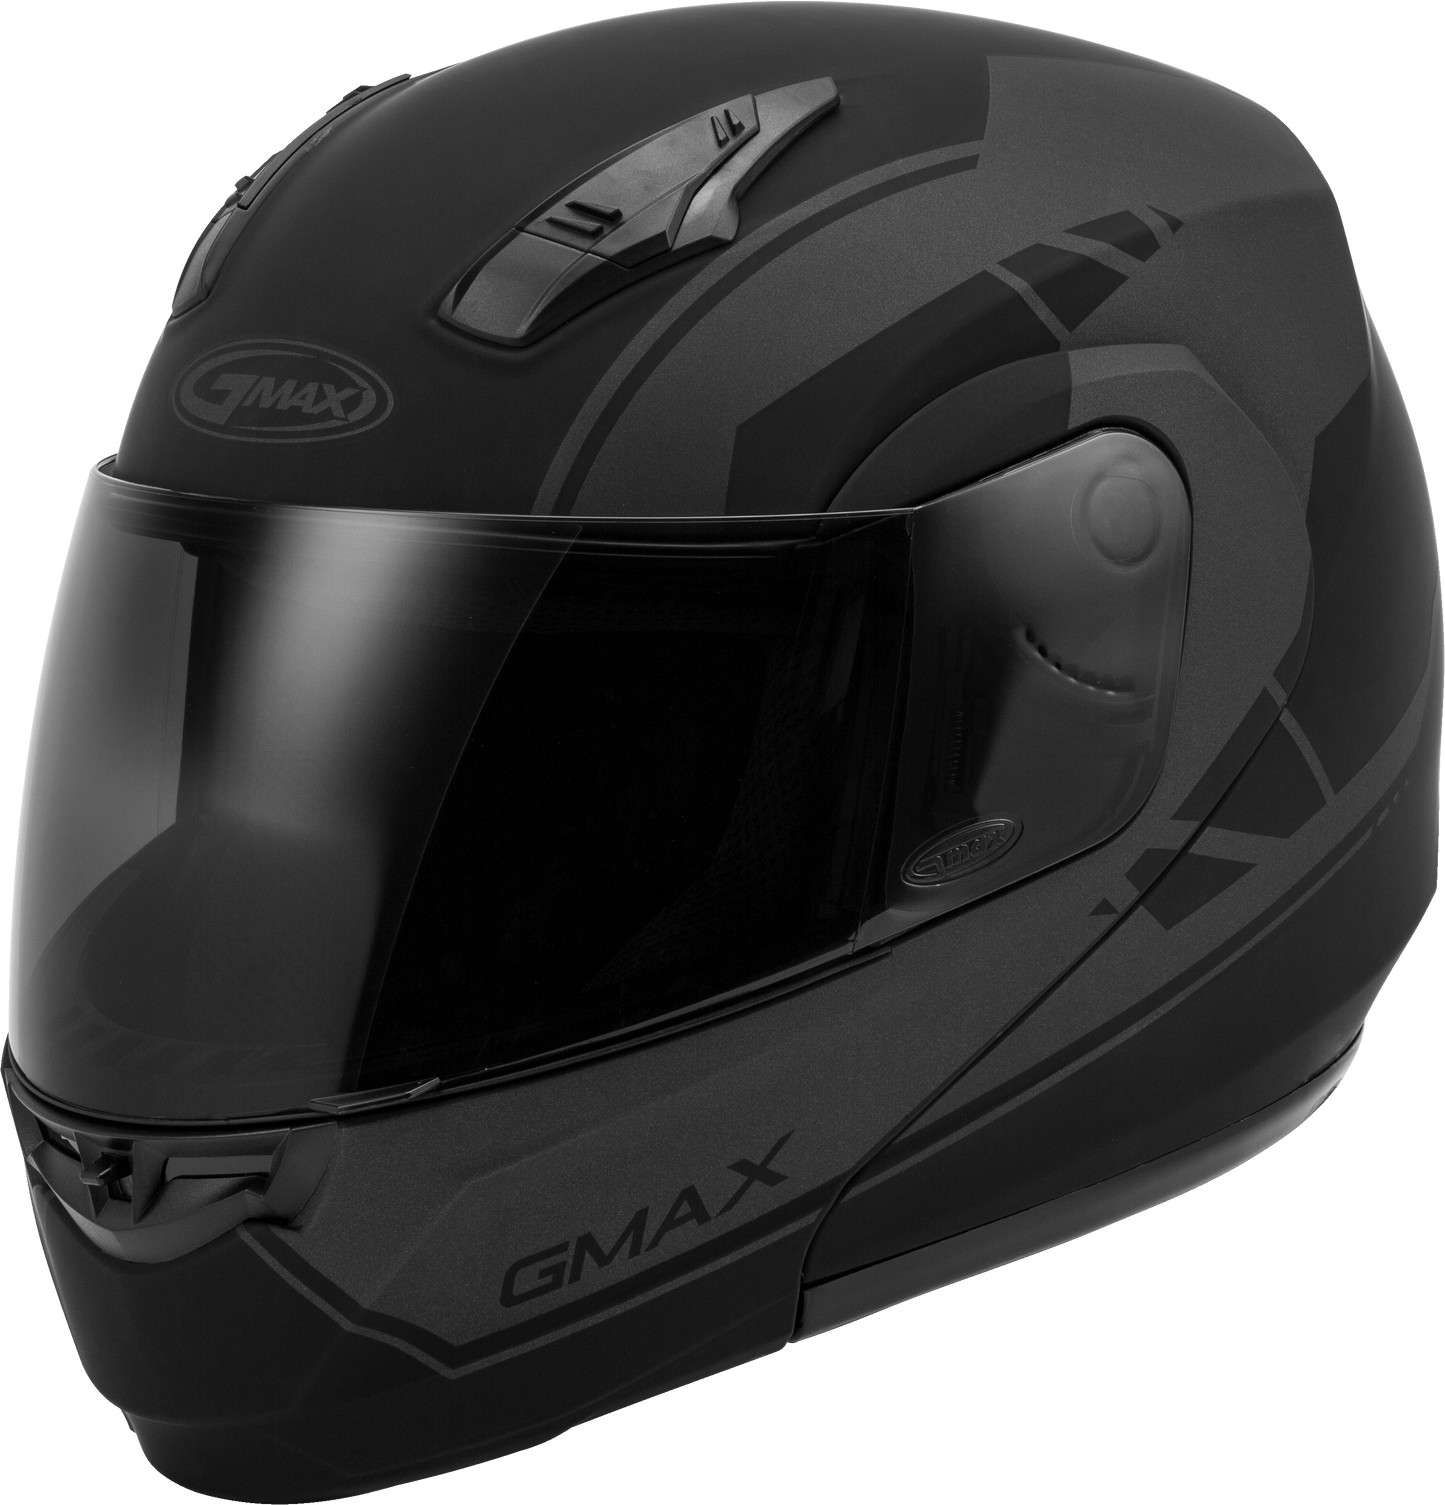 Gmax 72-5031 MD-04 'Article' Modular Helmet Matte Black/Grey